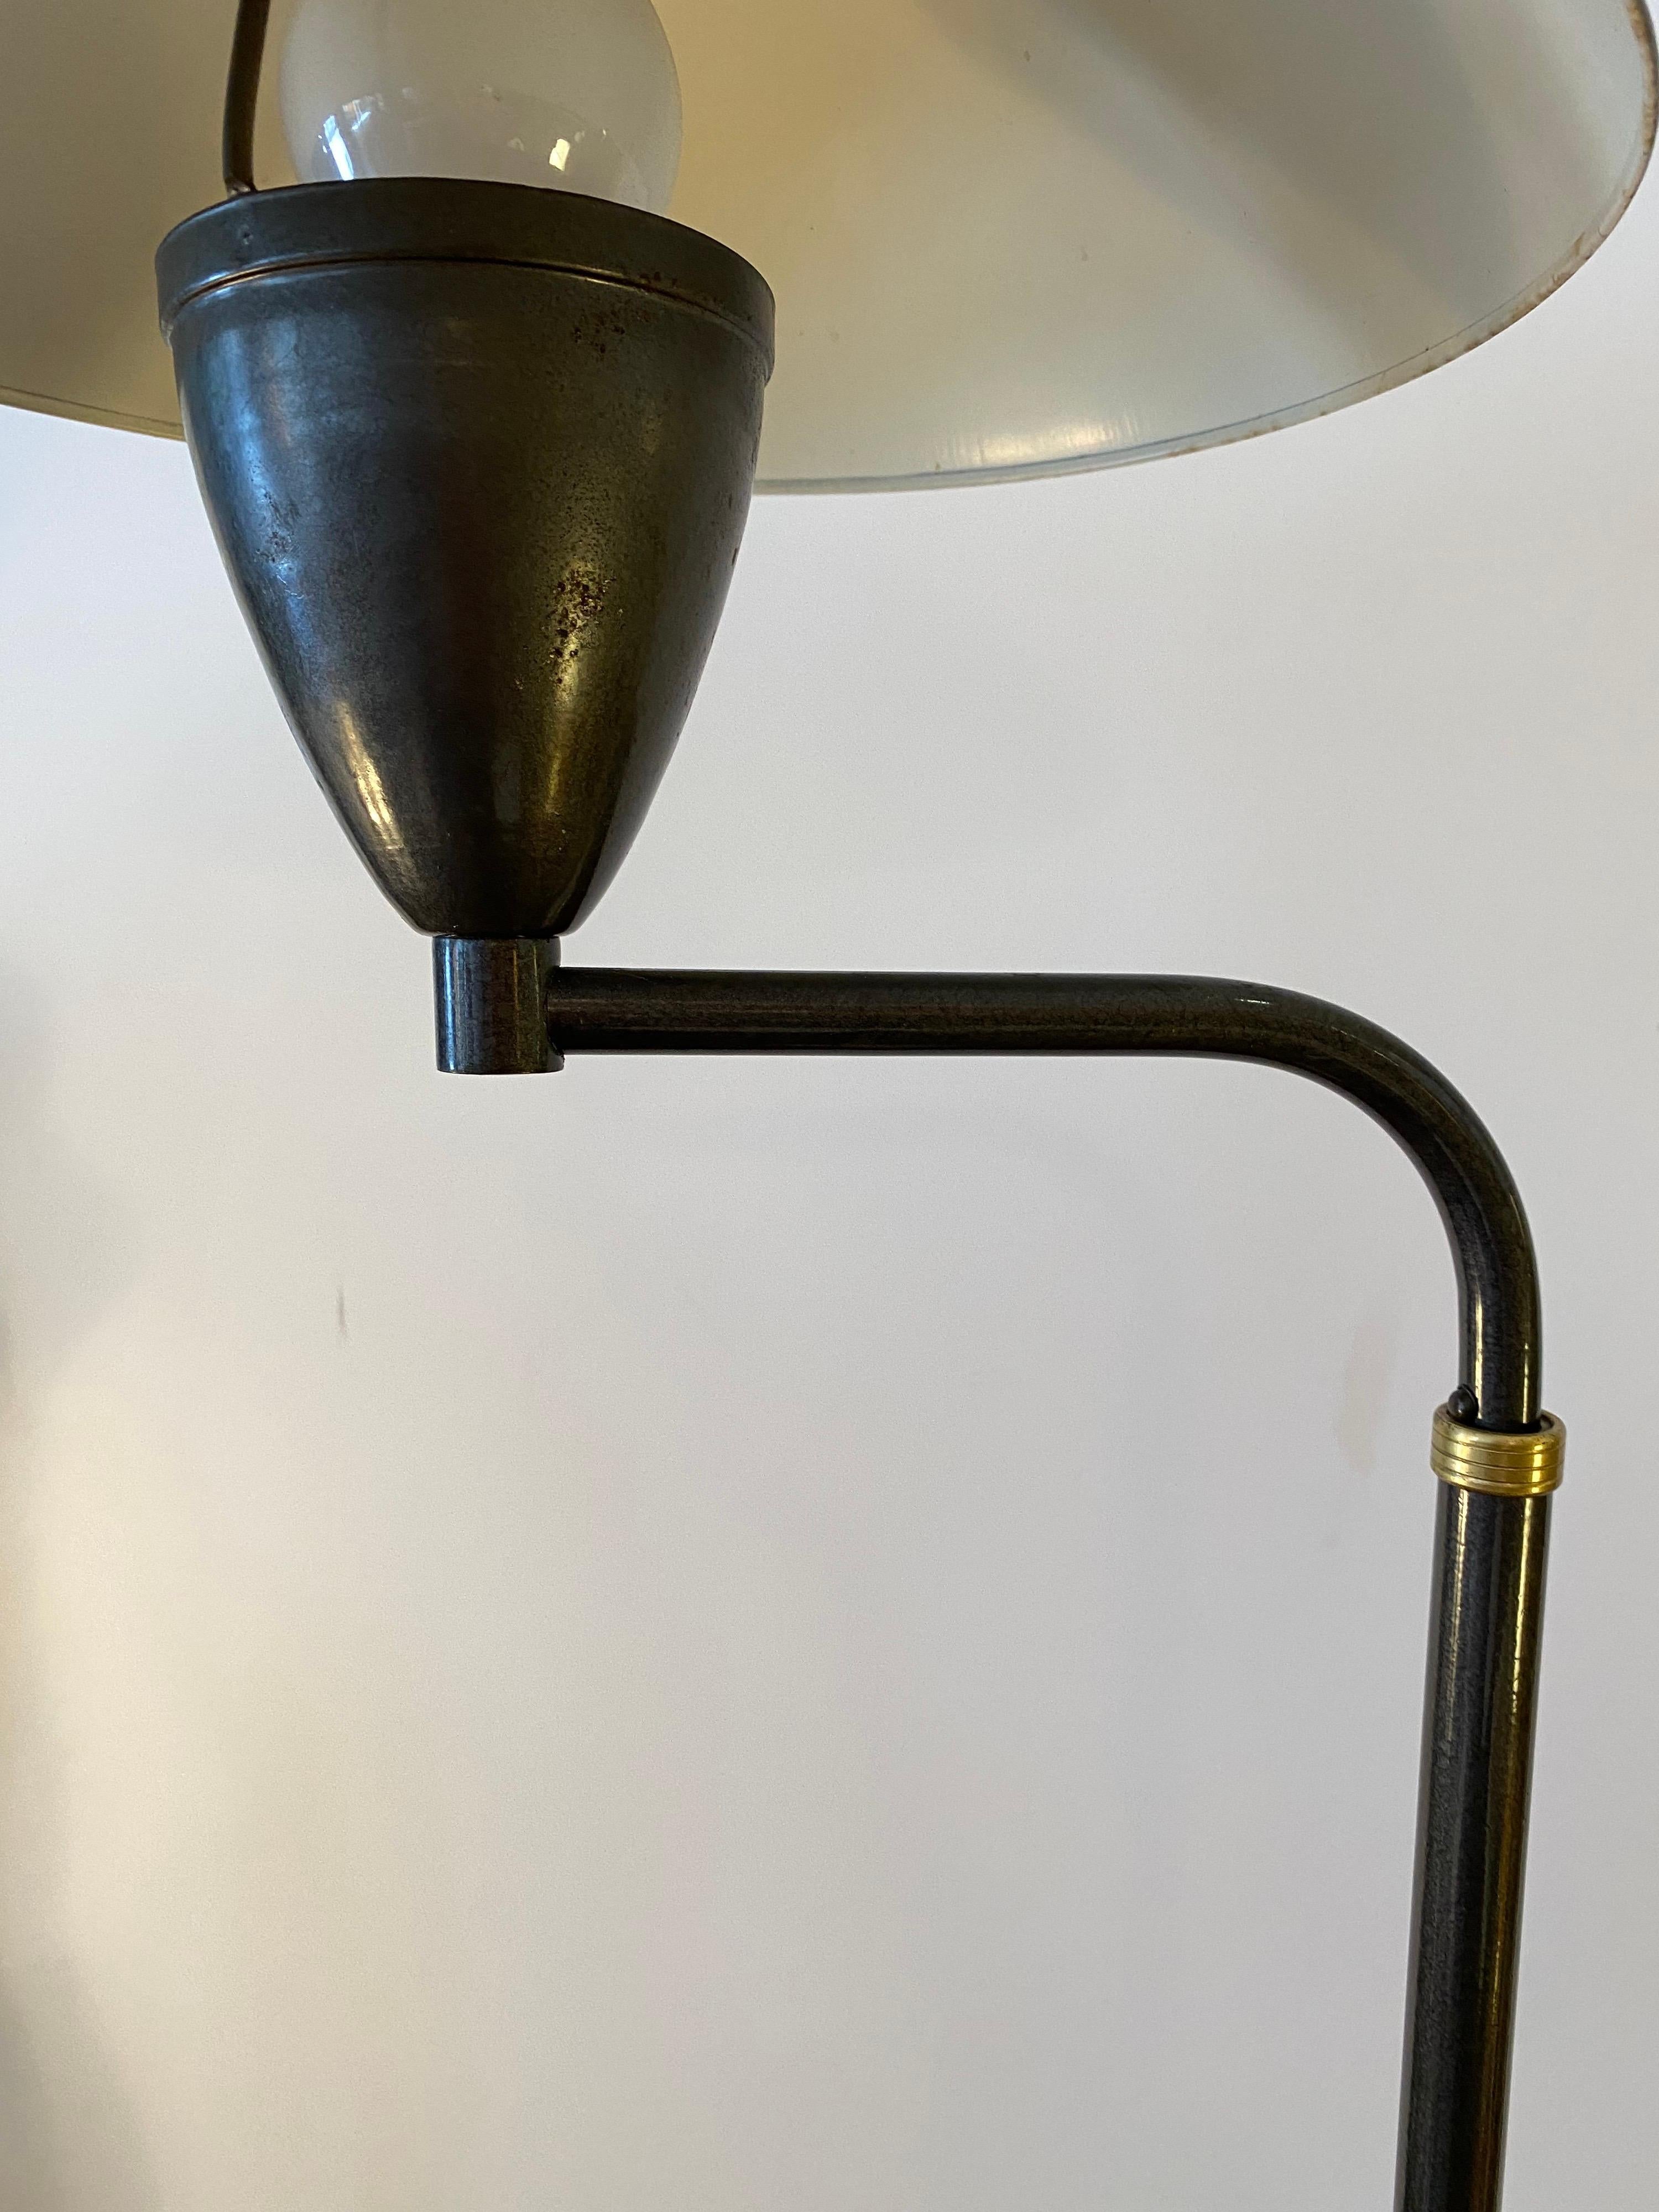 Adjustable floor lamp. Lamp adjusts from 41